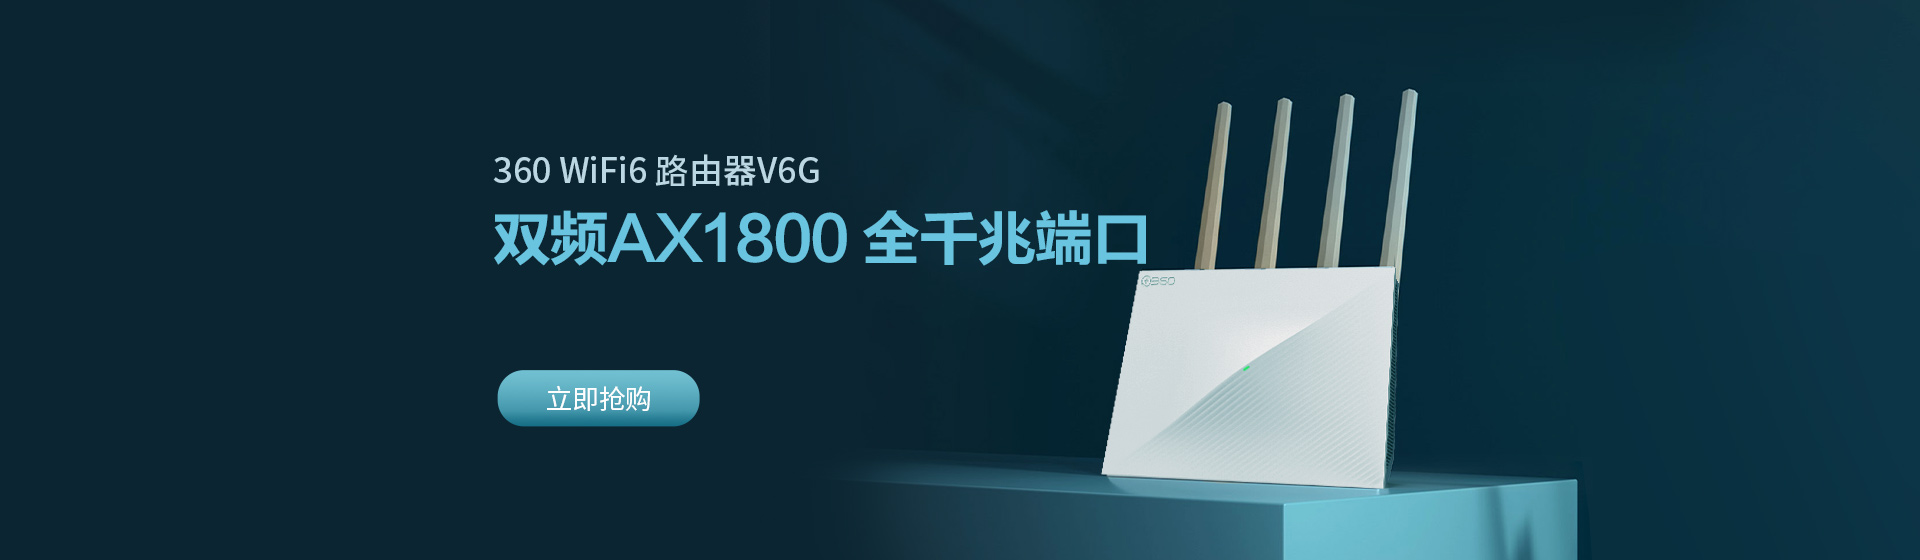 360 WiFi6 路由(you)器V6G